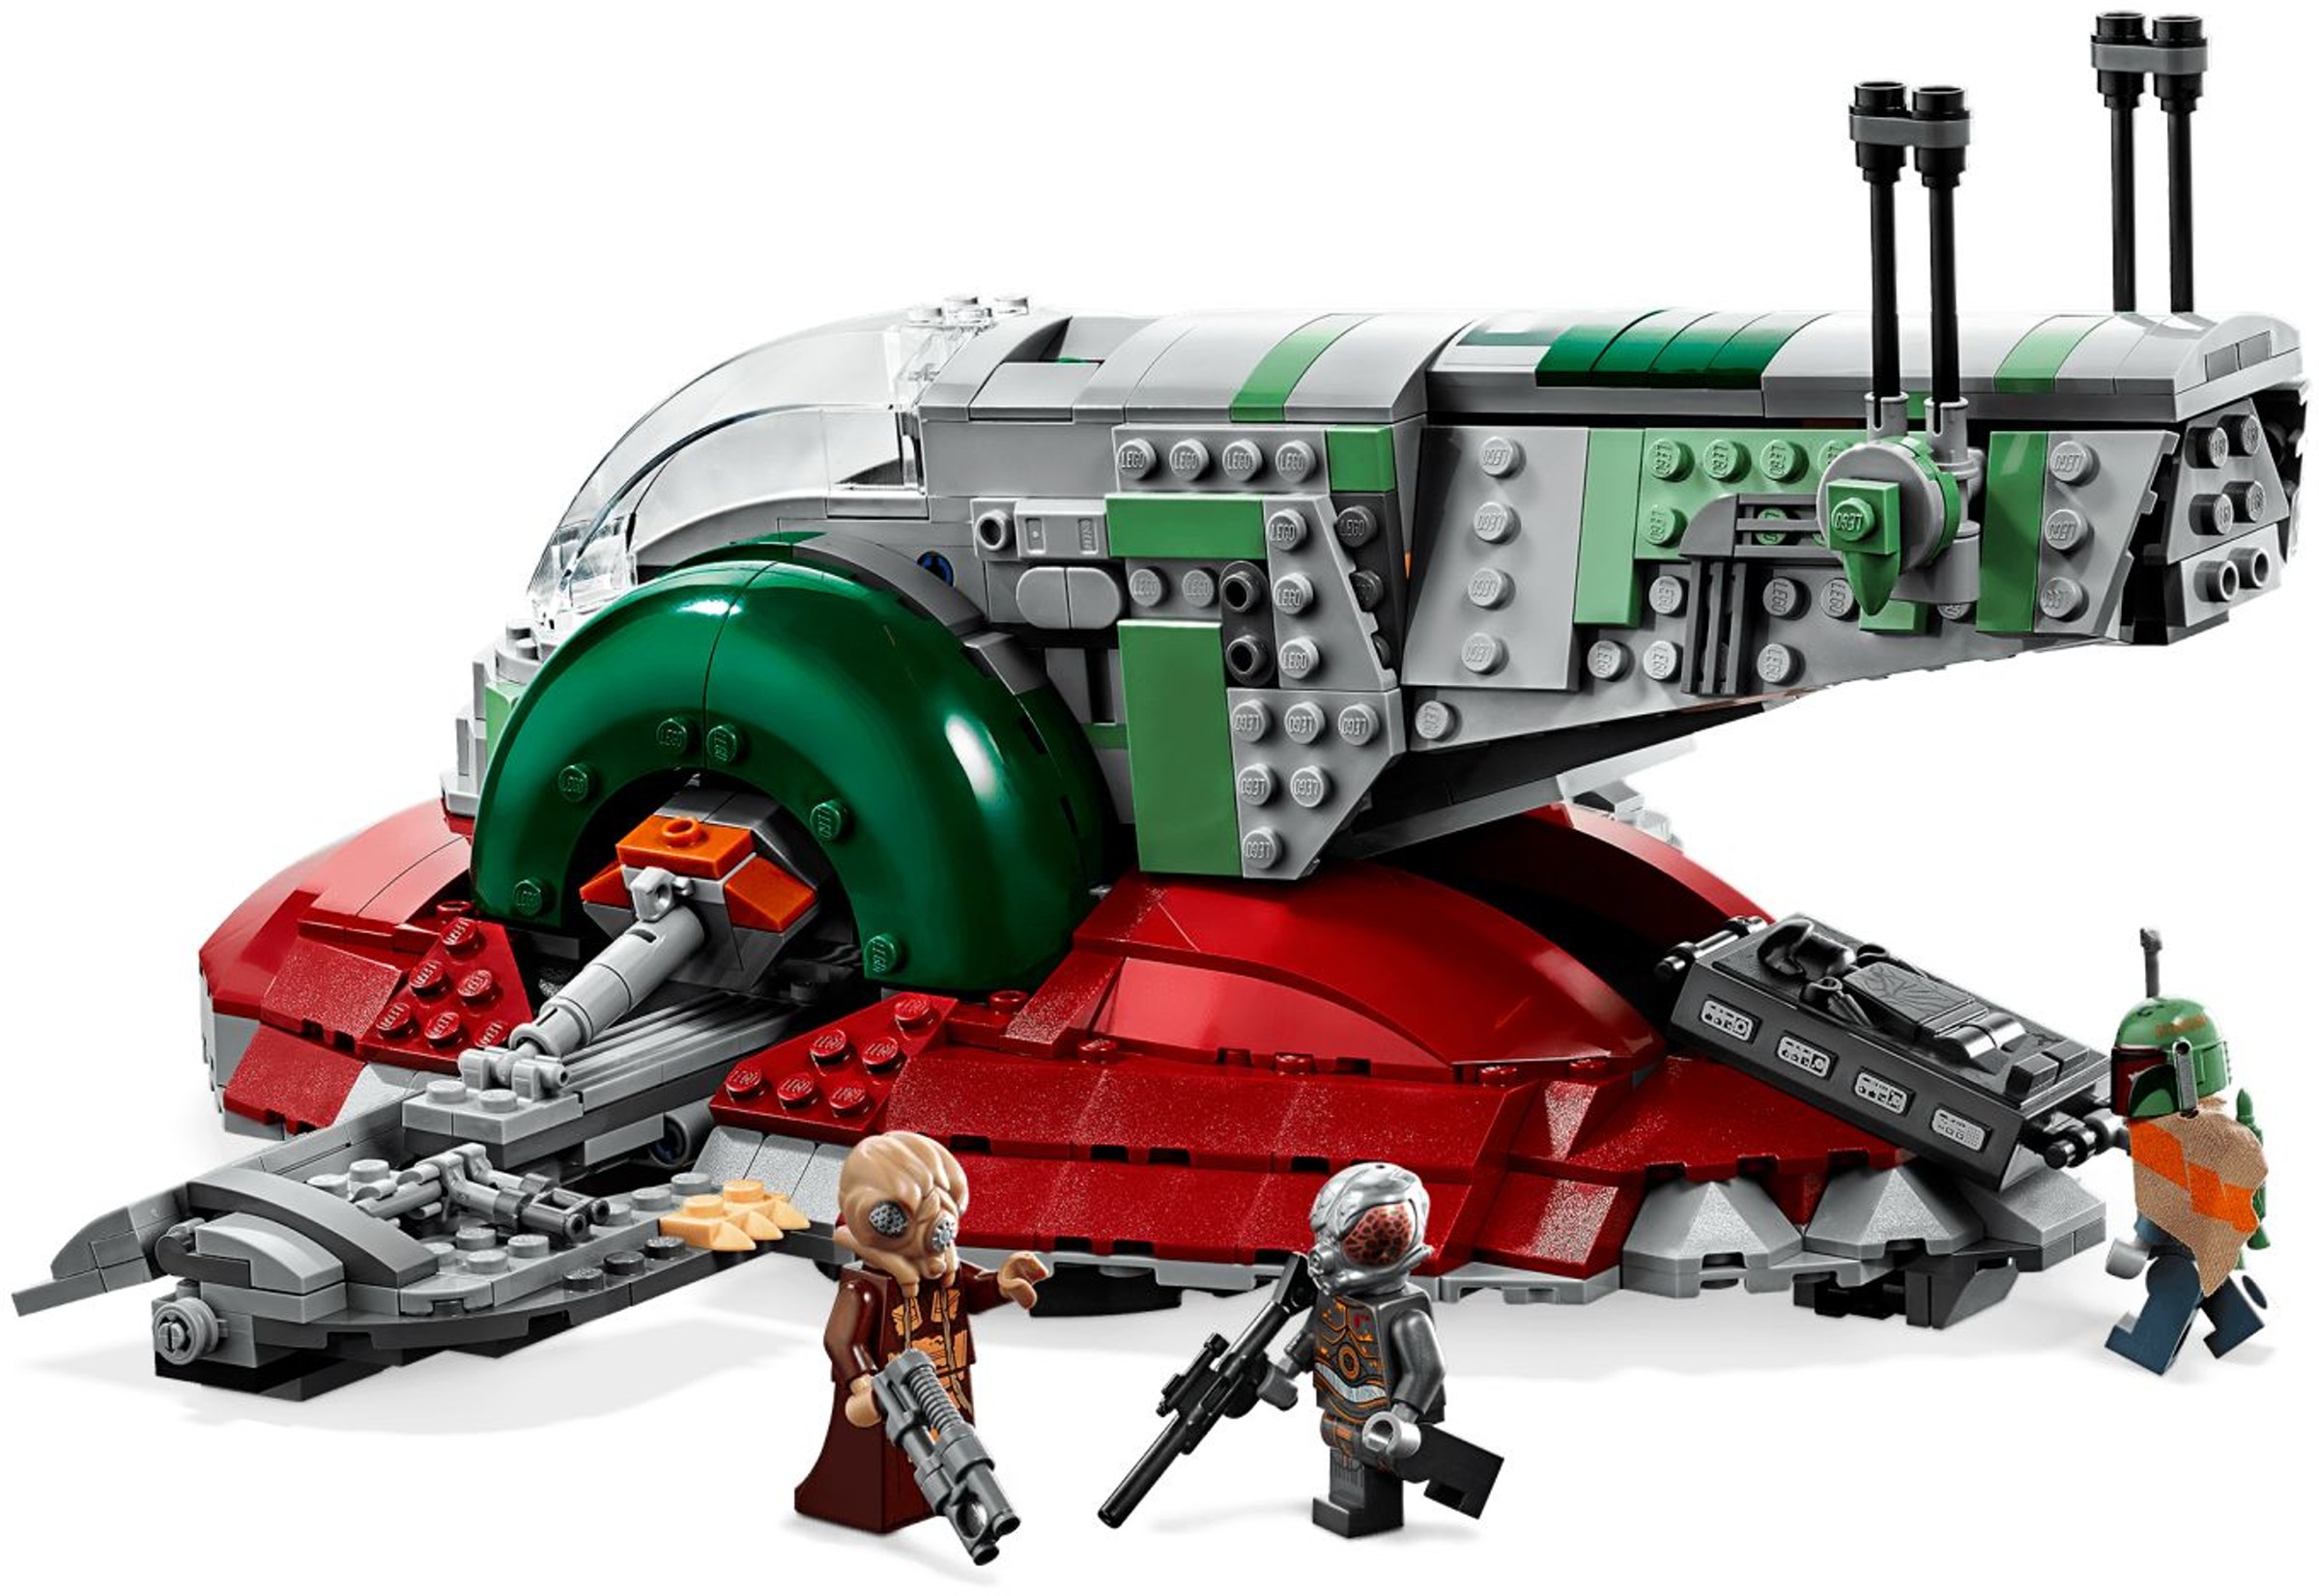 Carbonite Han Solo set 75243 Lego Star Wars Minifigures 